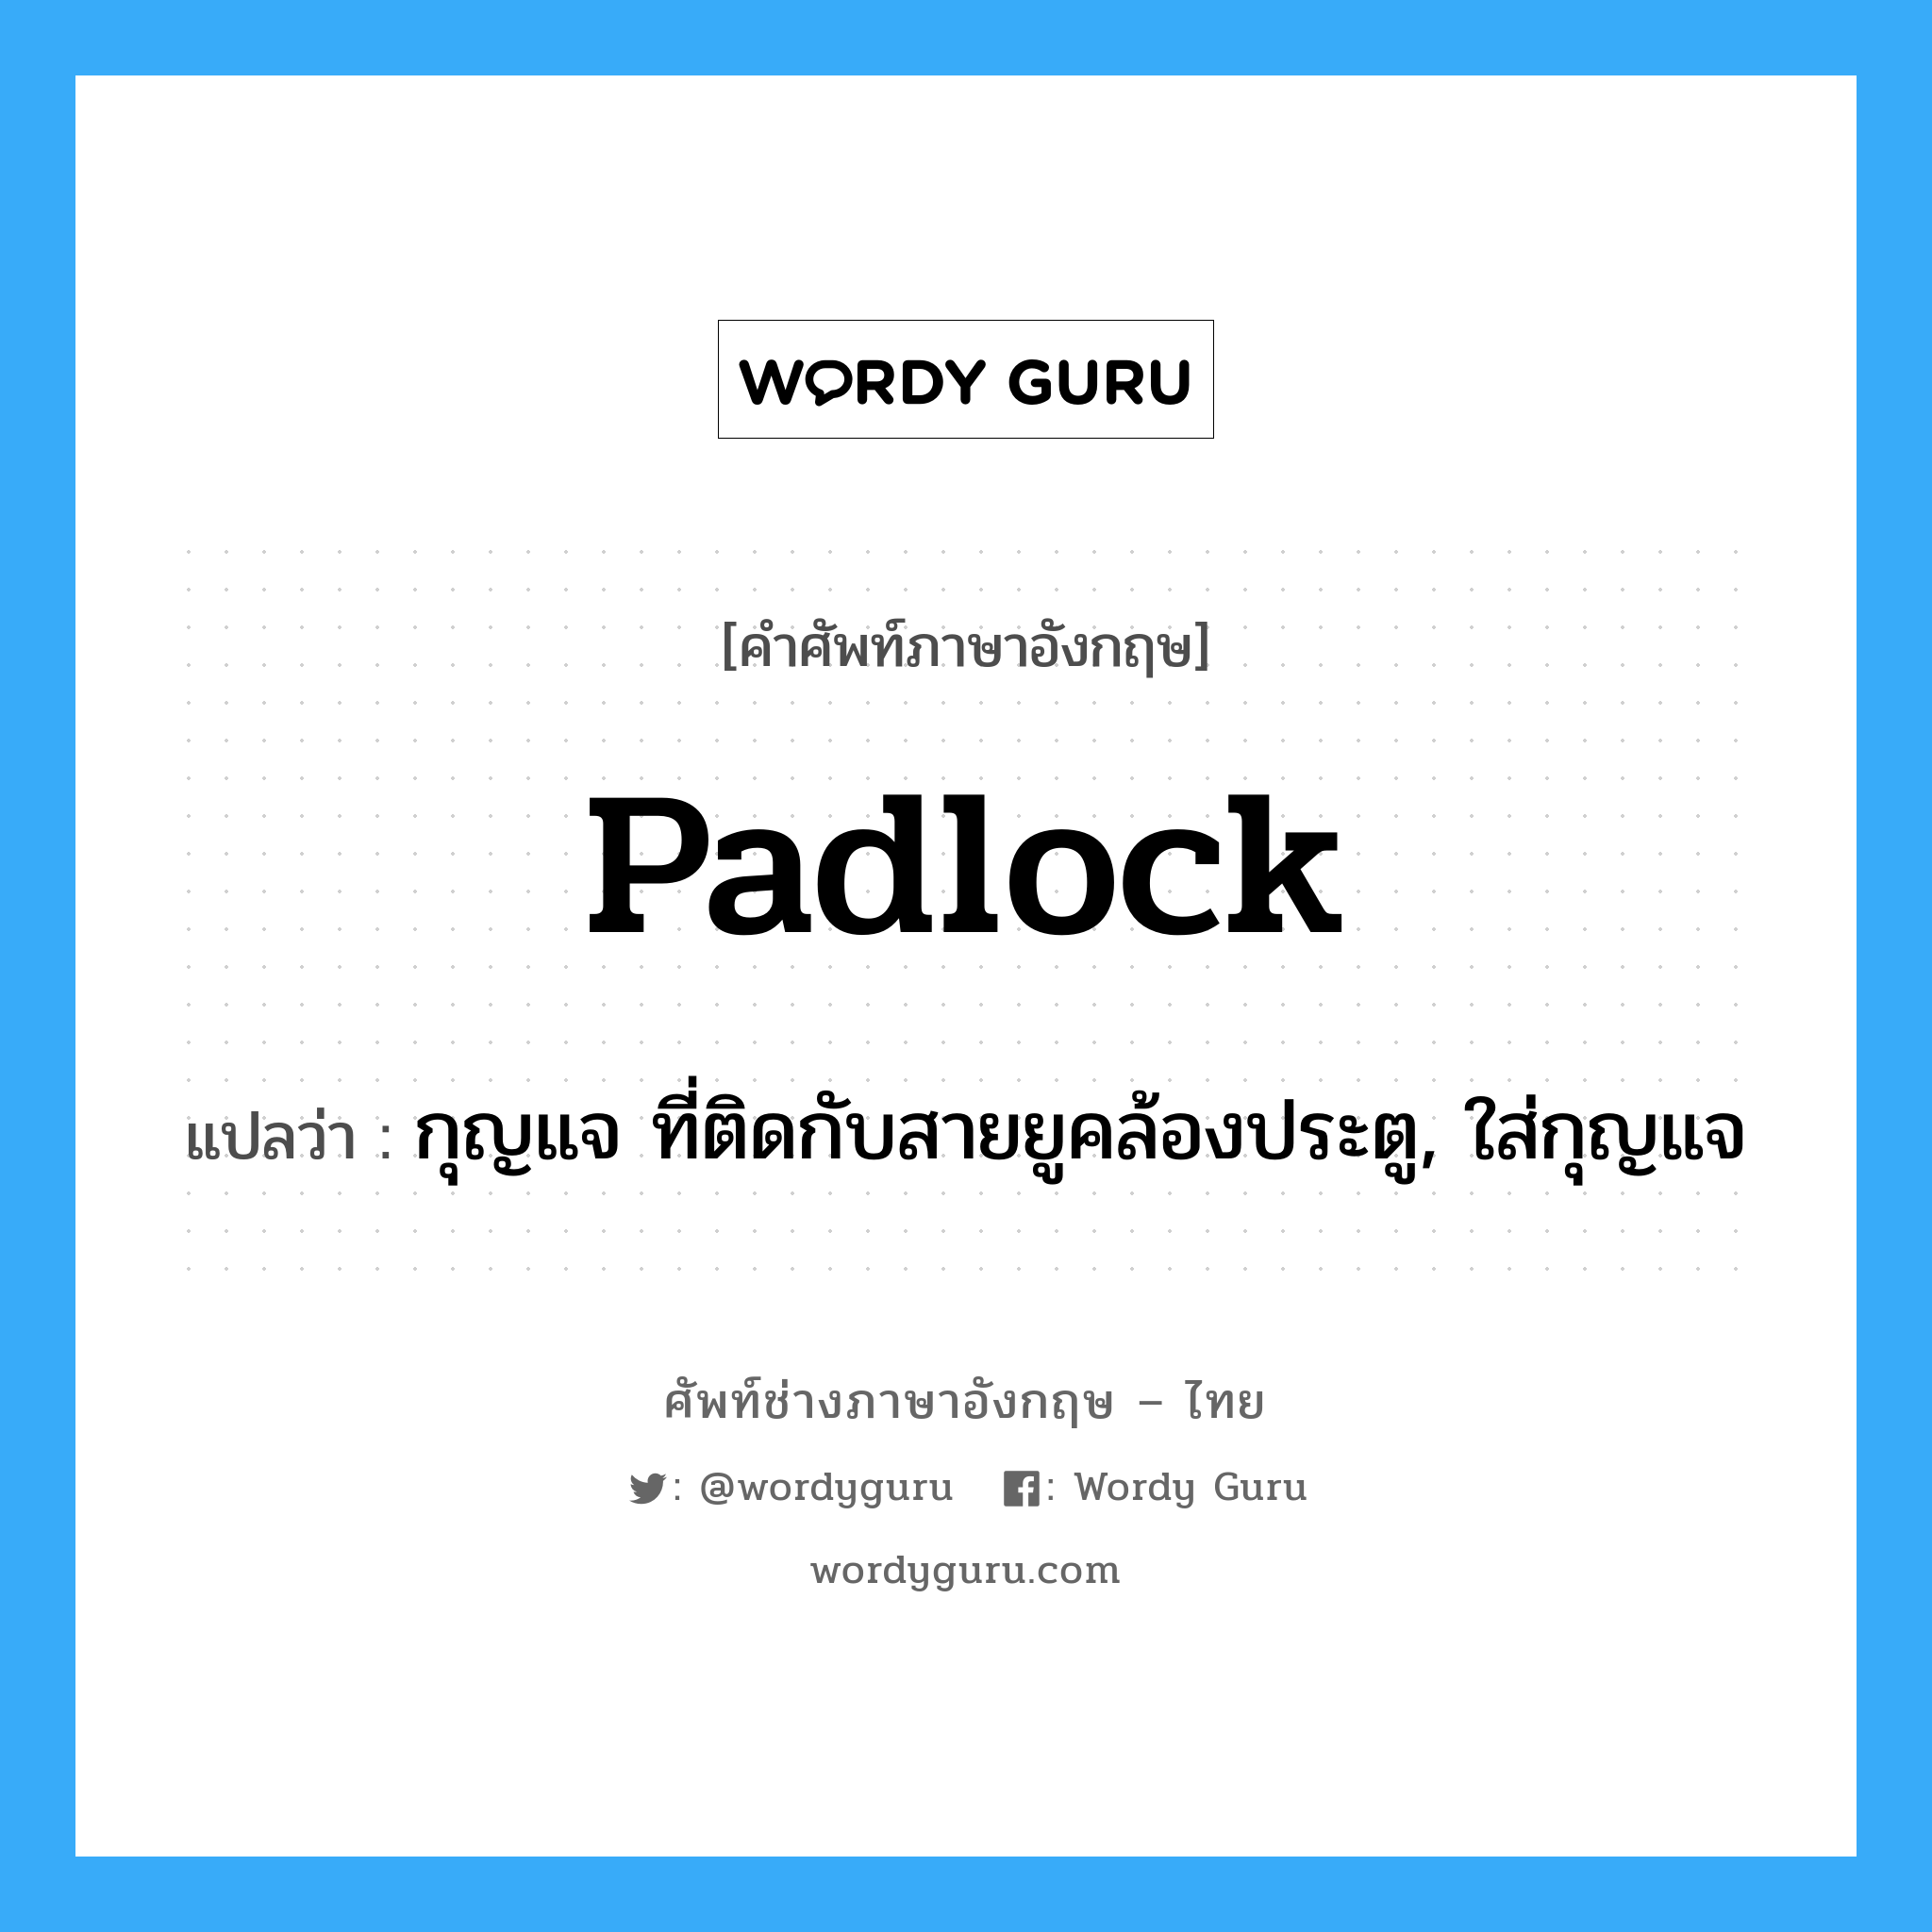 padlock แปลว่า?, คำศัพท์ช่างภาษาอังกฤษ - ไทย padlock คำศัพท์ภาษาอังกฤษ padlock แปลว่า กุญแจ ที่ติดกับสายยูคล้องประตู, ใส่กุญแจ